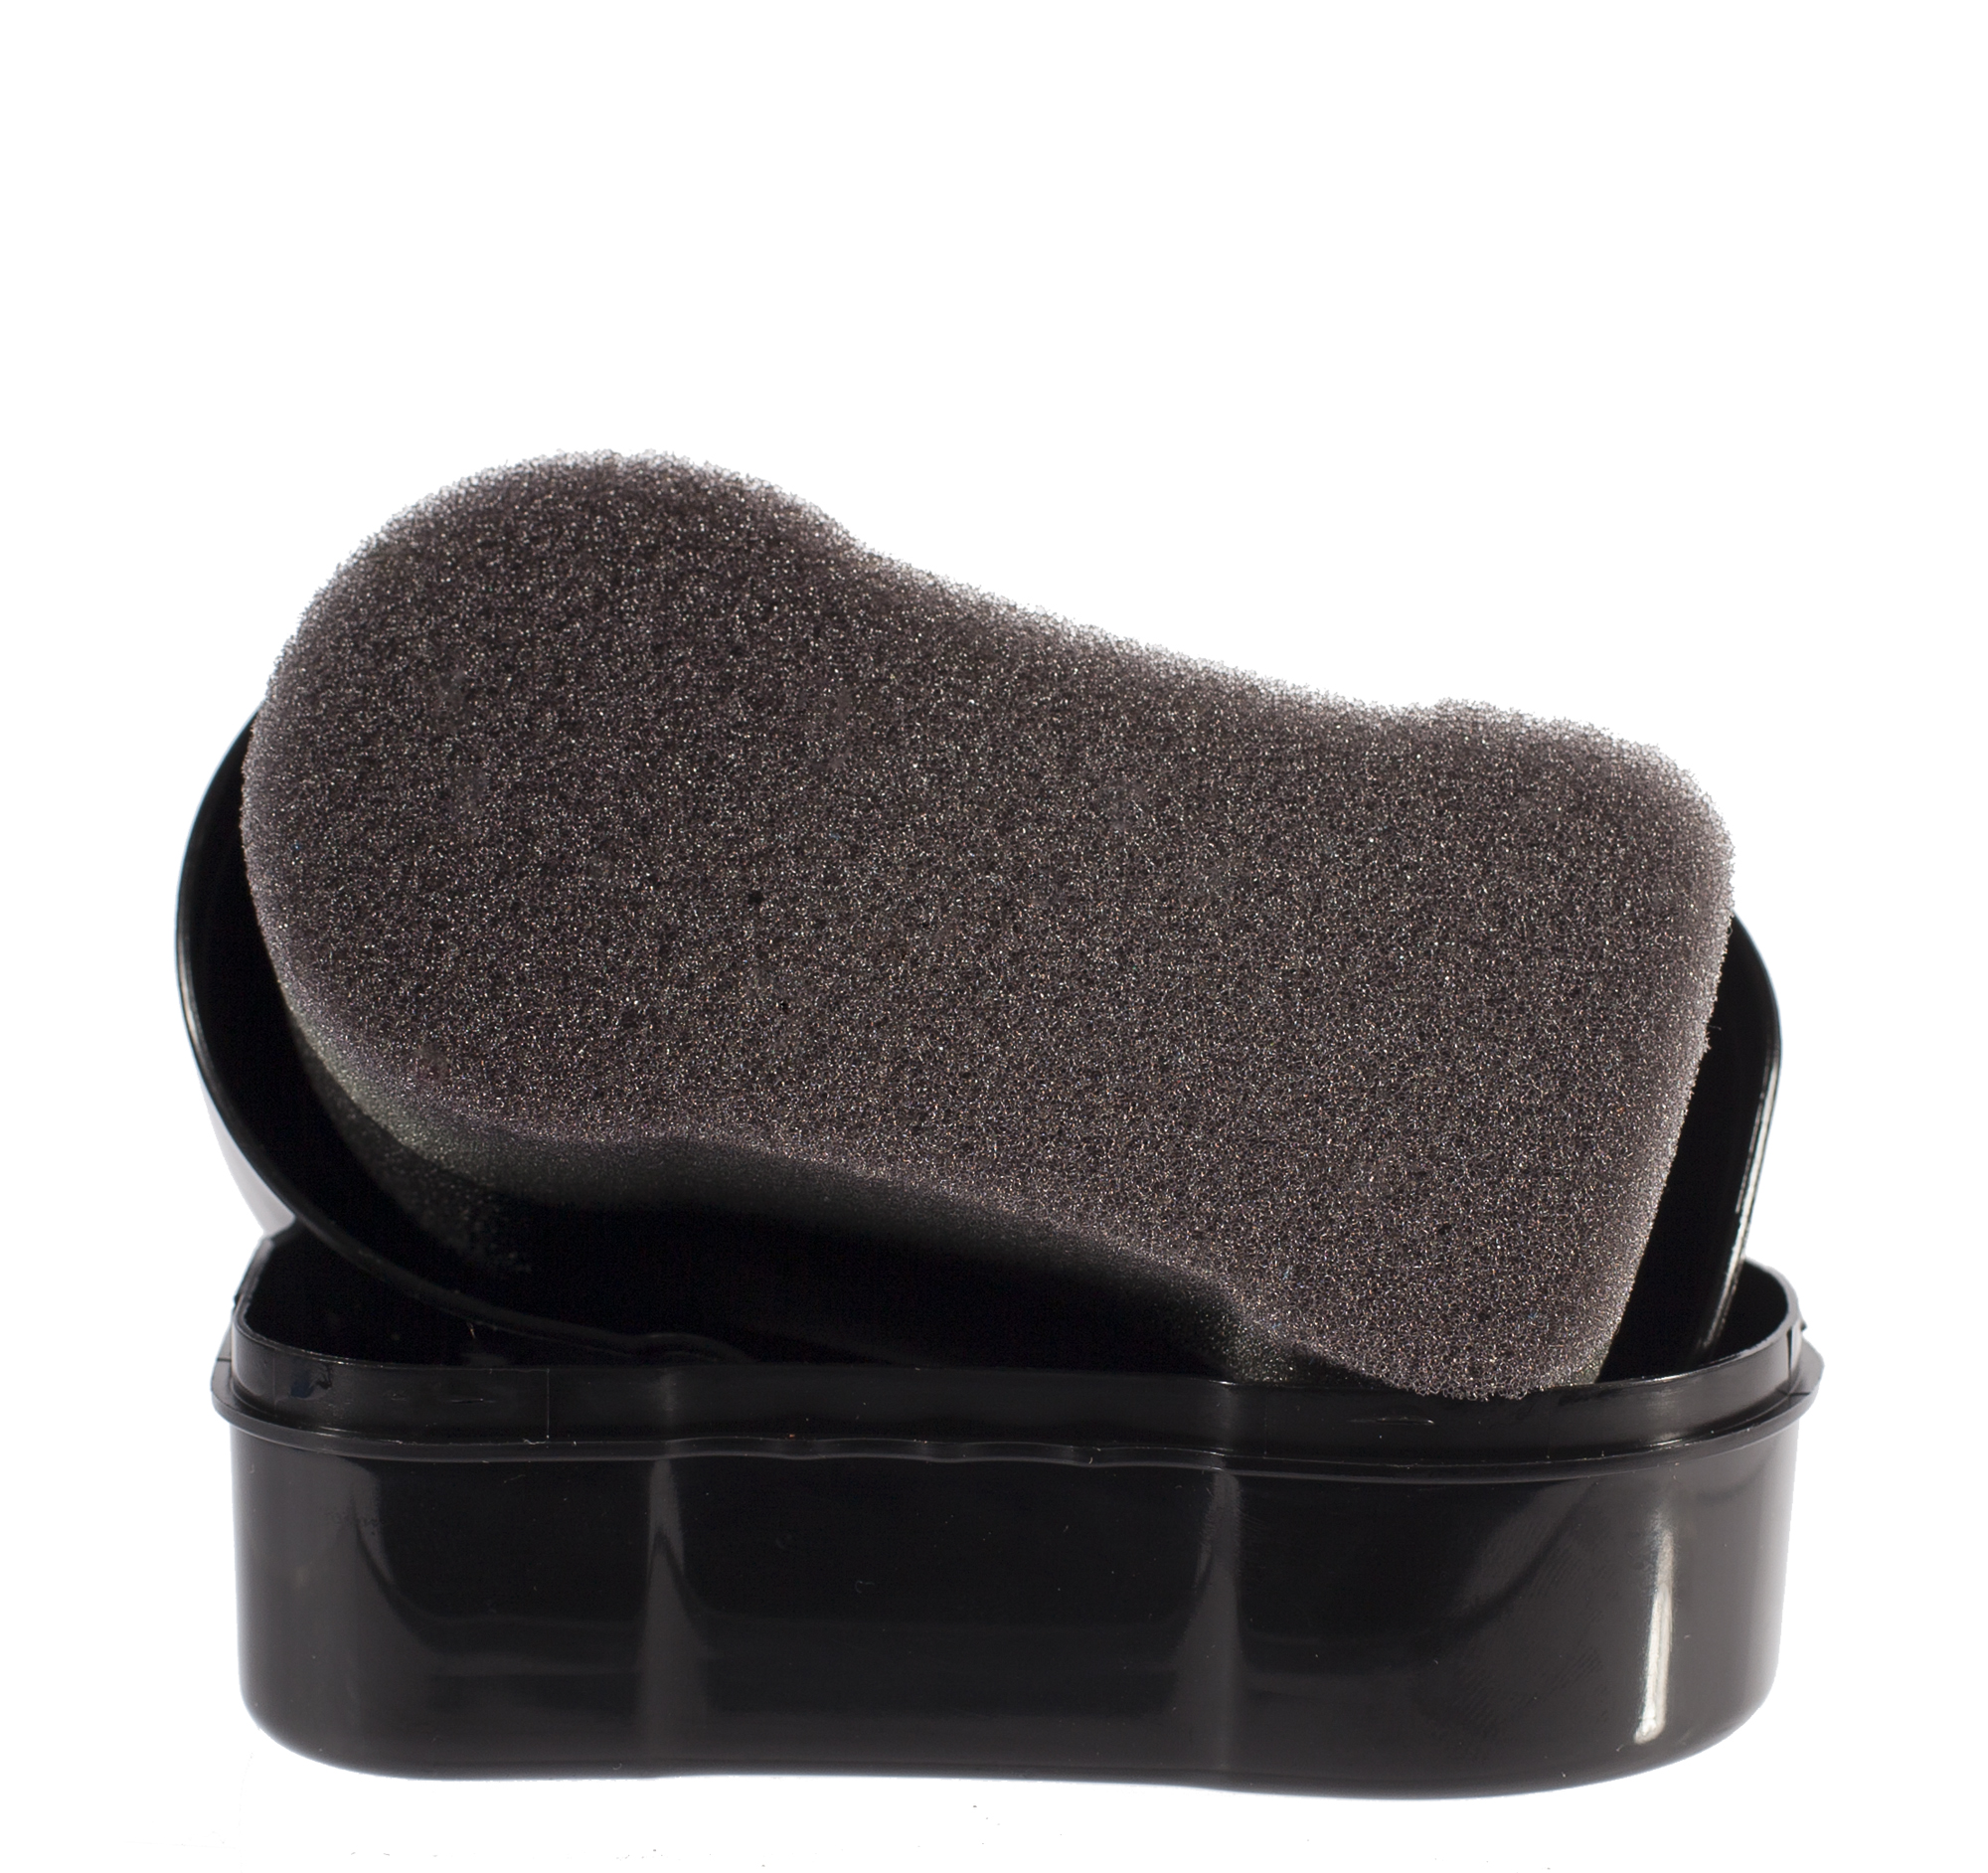 Loopeer 6 Pcs Shoe Shine Sponge Neutral Shine Sponge for Shoes Leather Boot  Shoe Polish Sponge for Boots Bags Cleaning (Stylish Style,4.33 x 2.83 x